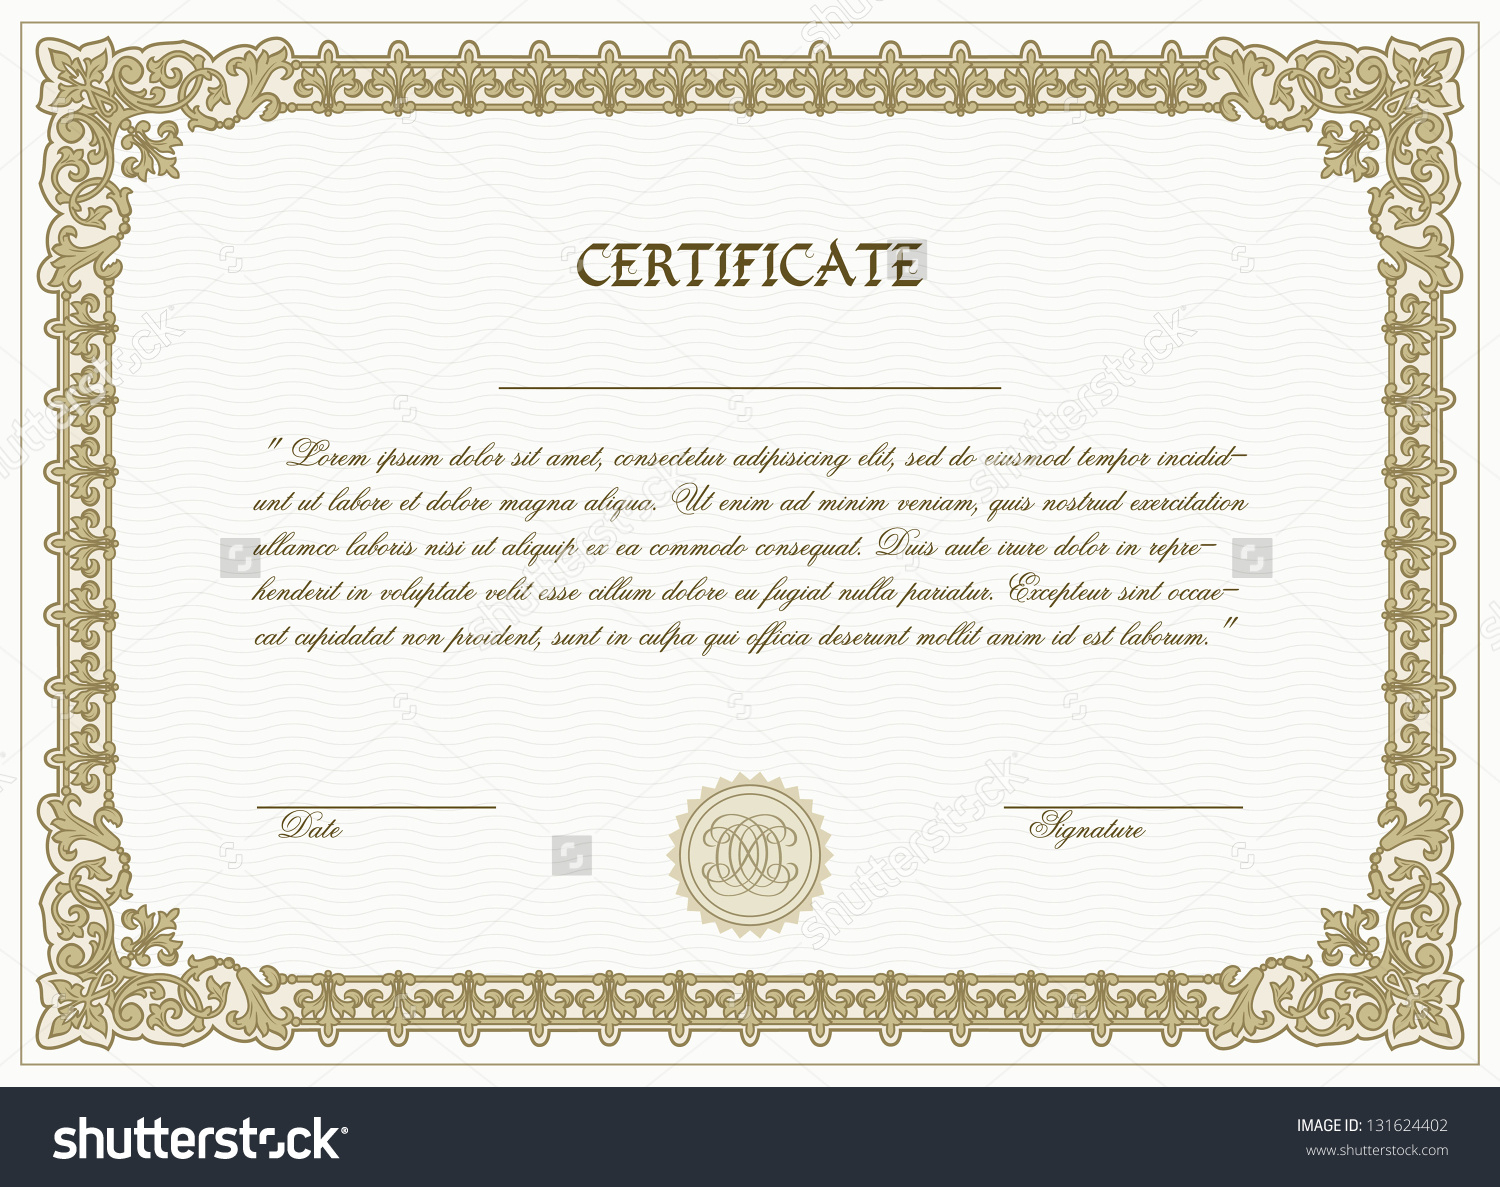 High Resolution Certificate Template - Atlantaauctionco In High Resolution Certificate Template